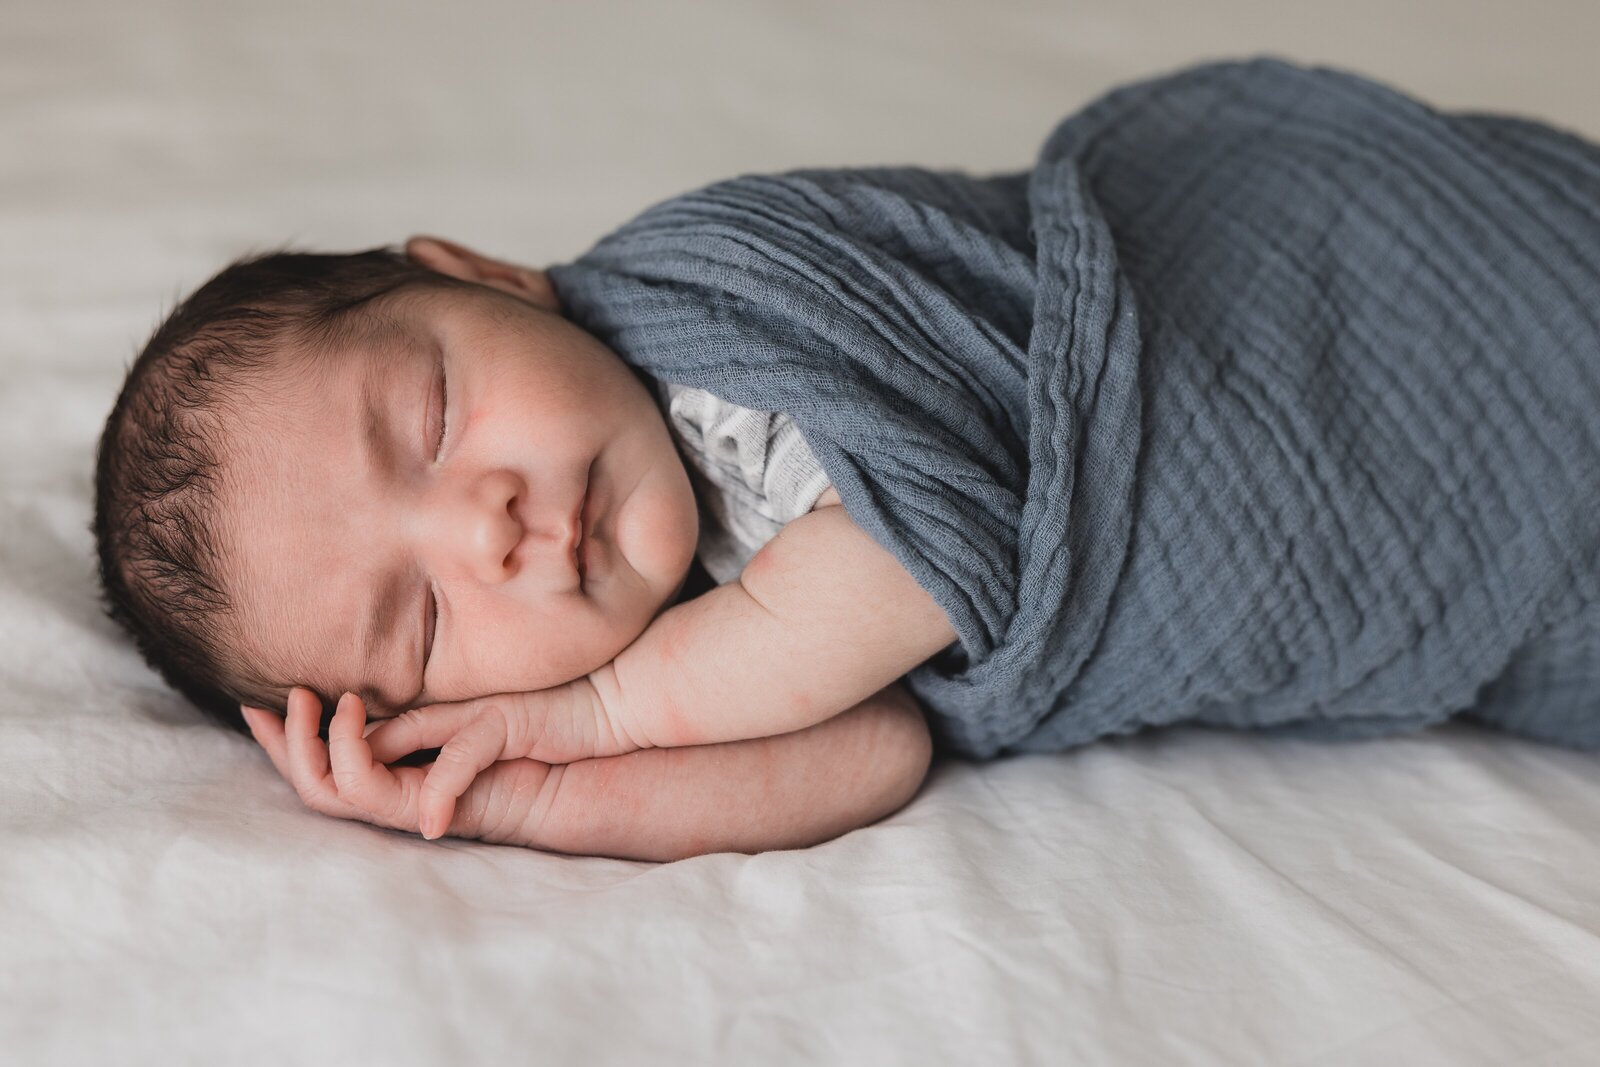 Newborn baby sleeping pose during lifestyle photo session by Jennifer Beal Photography